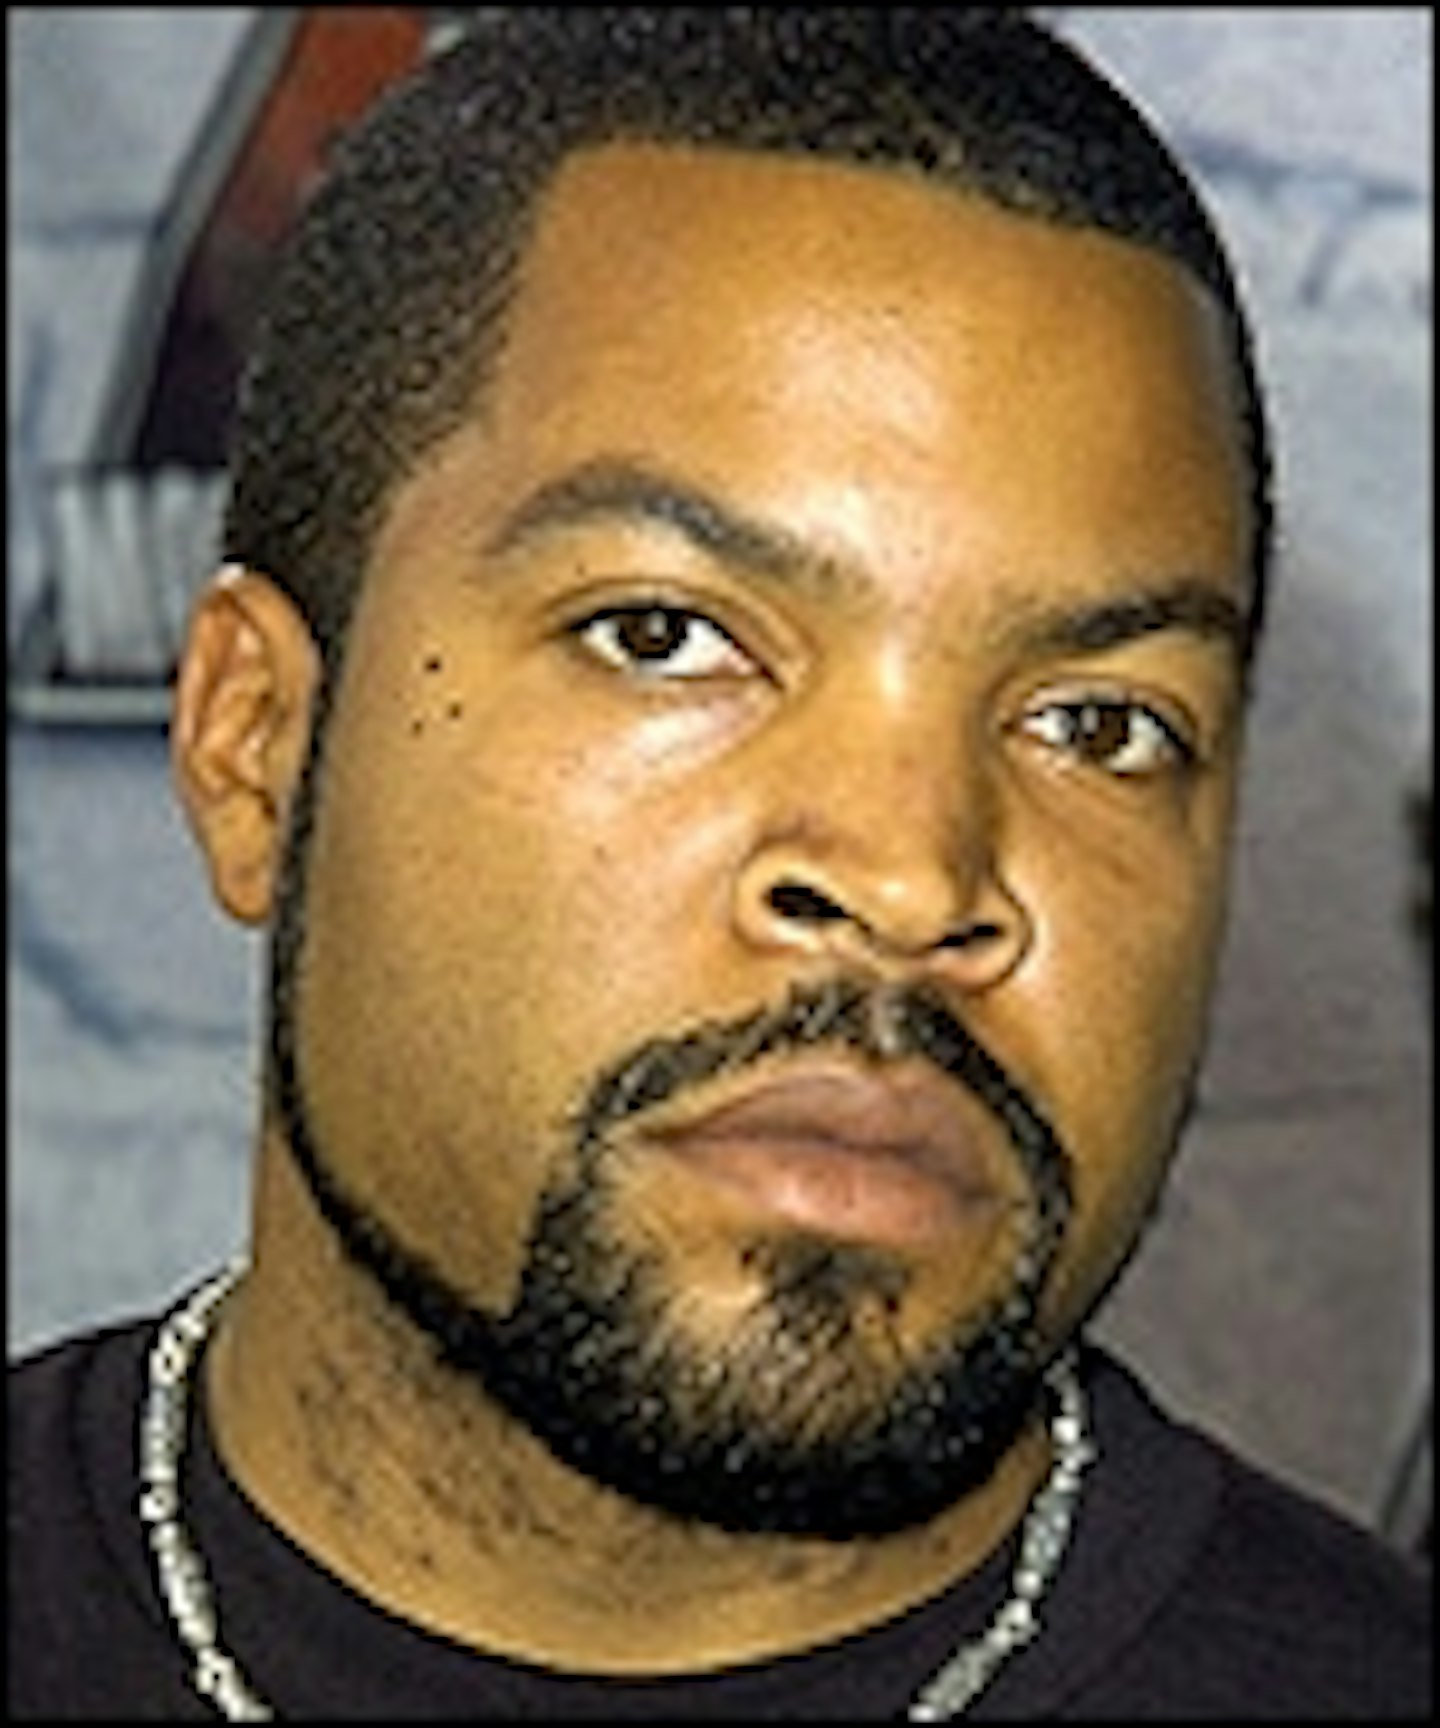 Ice Cube As Dirty Harry?